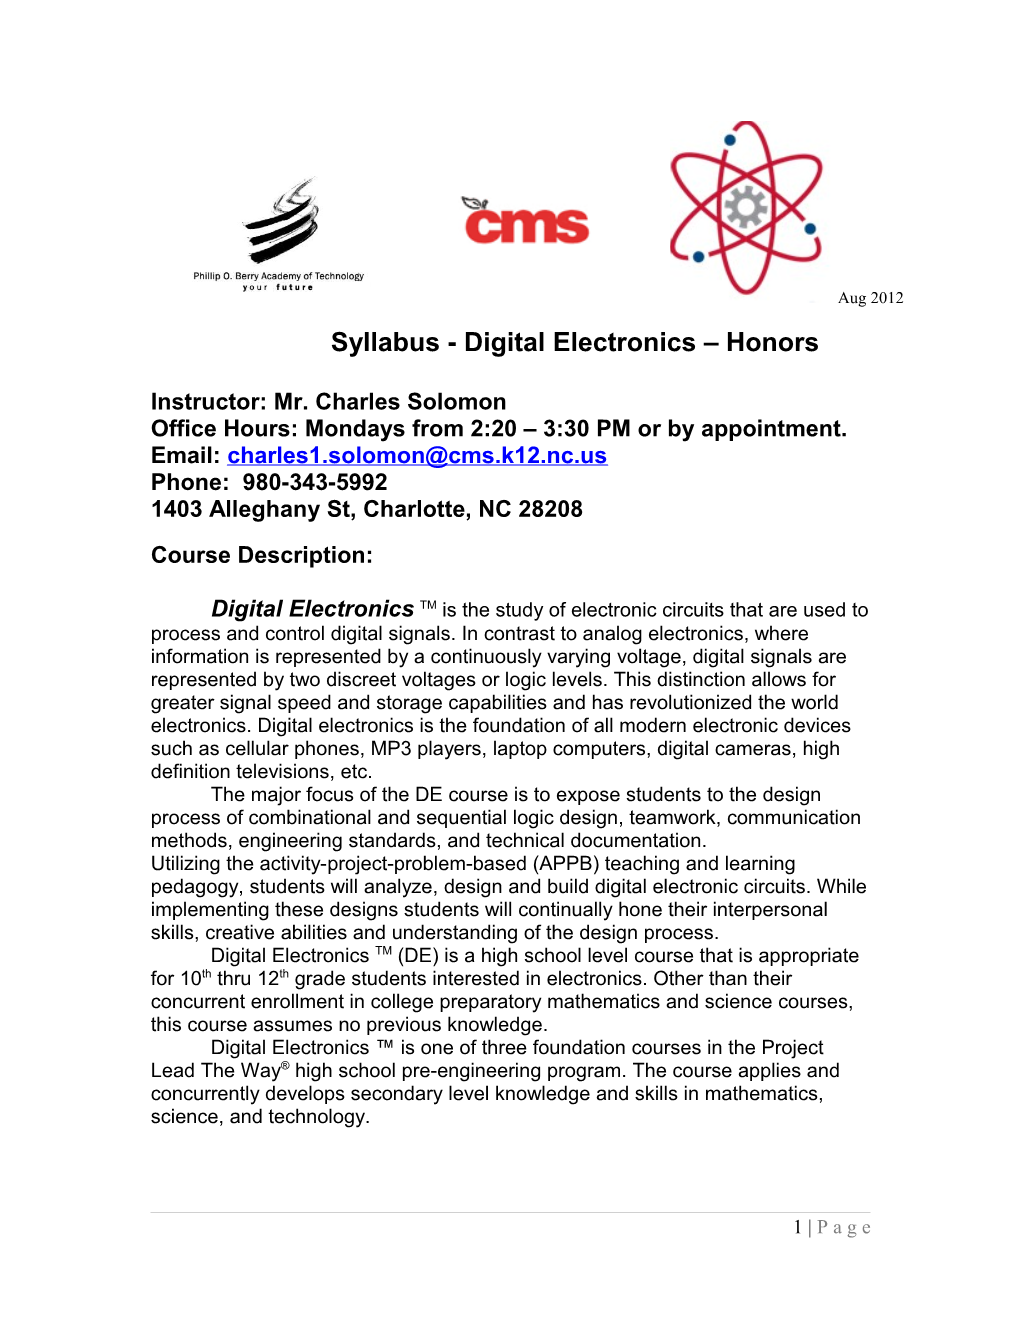 Syllabus - Digital Electronics Honors